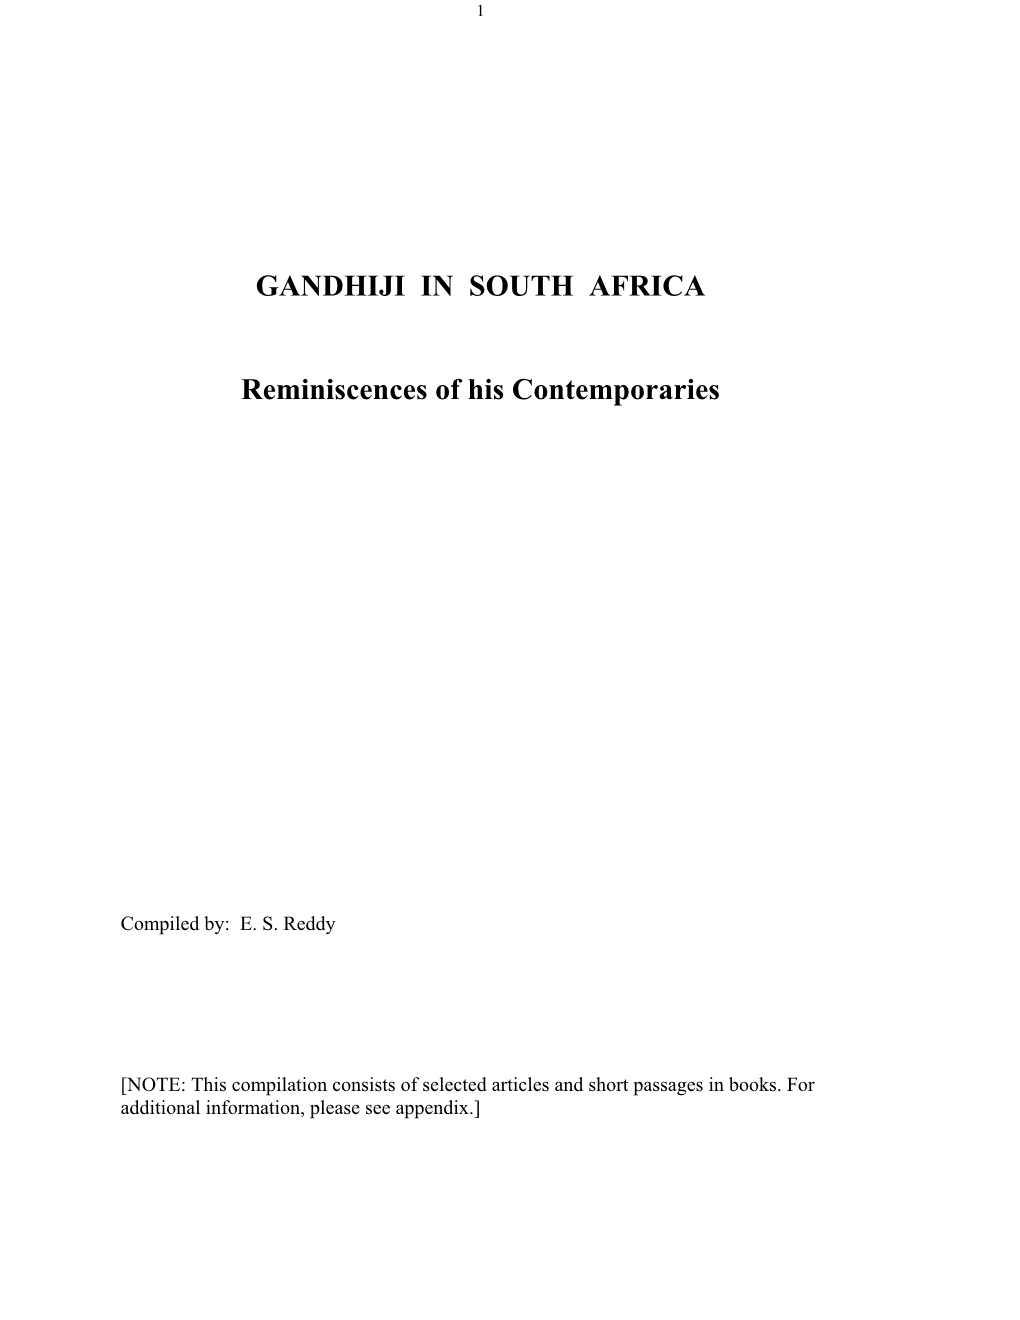 GANDHIJI in SOUTH AFRICA Reminiscences of His Contemporaries